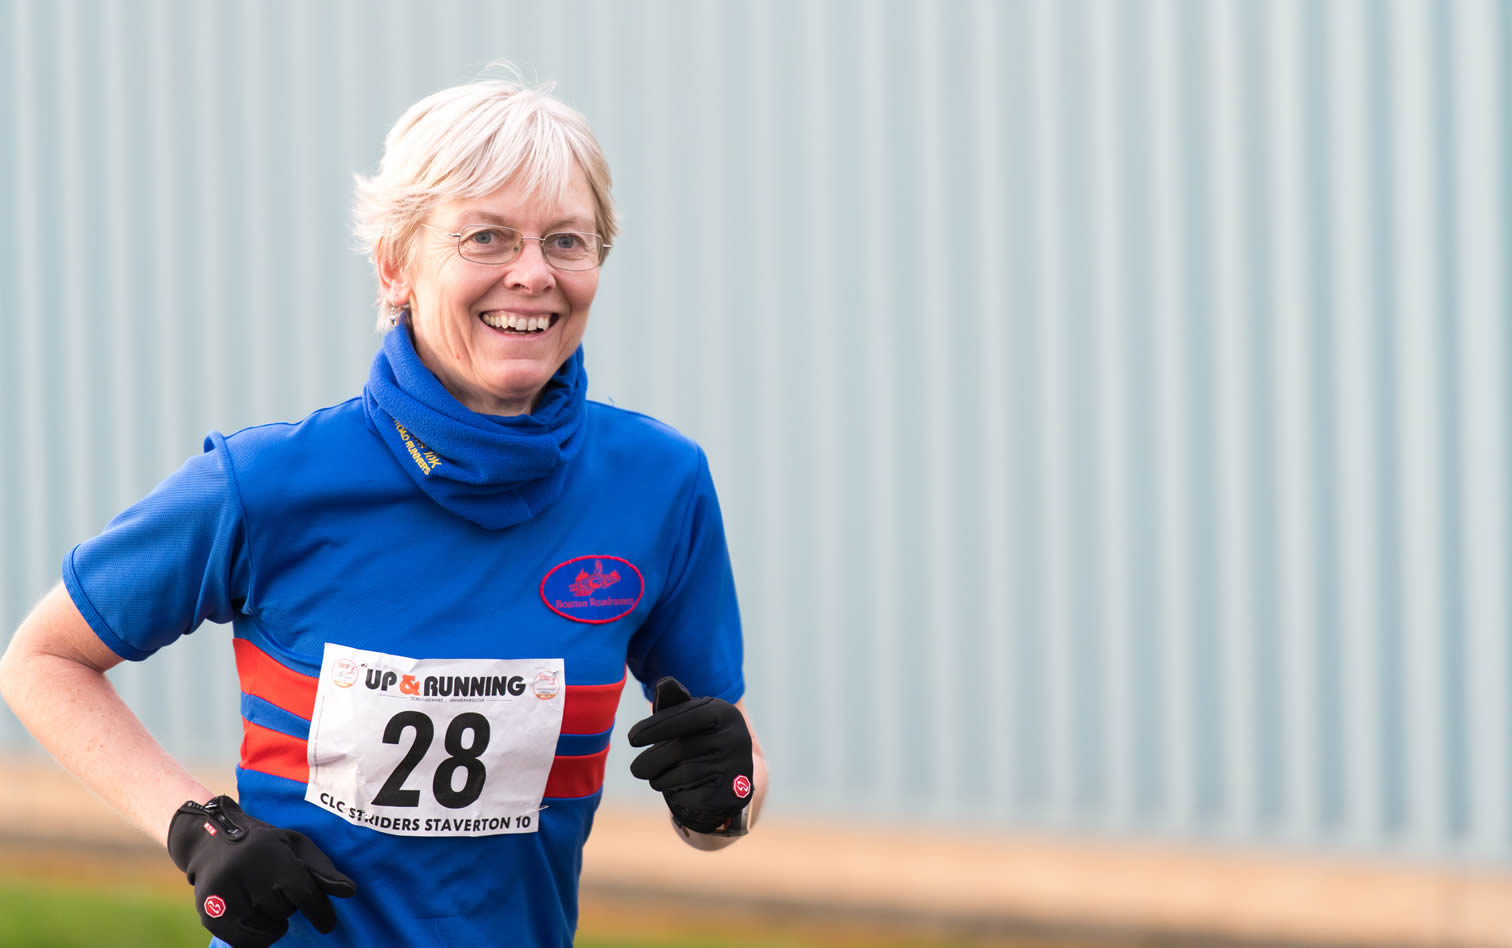 Bourton Roadrunners' Gillian Carrick at Staverton 10m - 26-01-2020